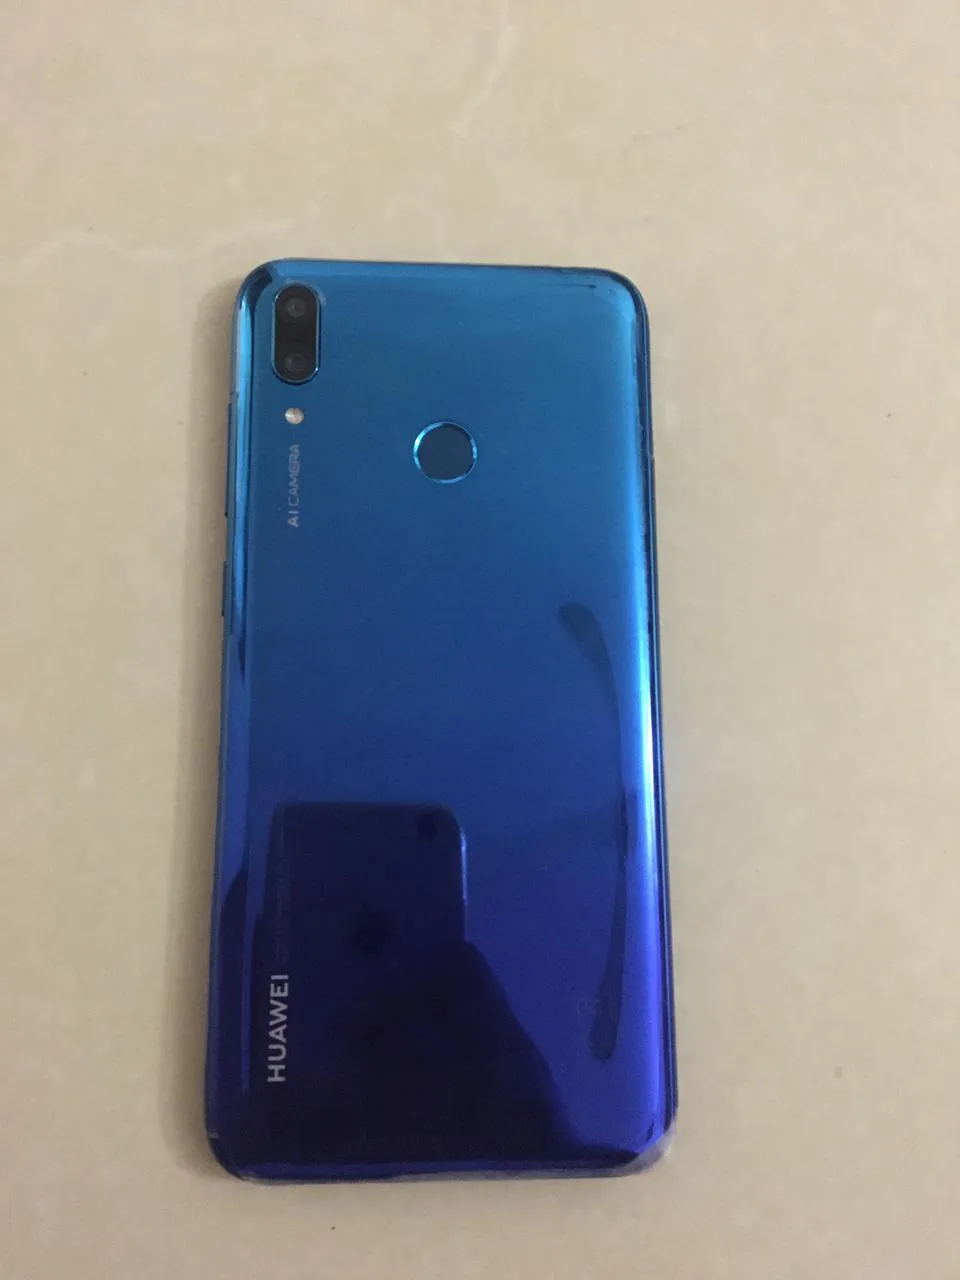 Huawei y7 prime 2019 - photo 2